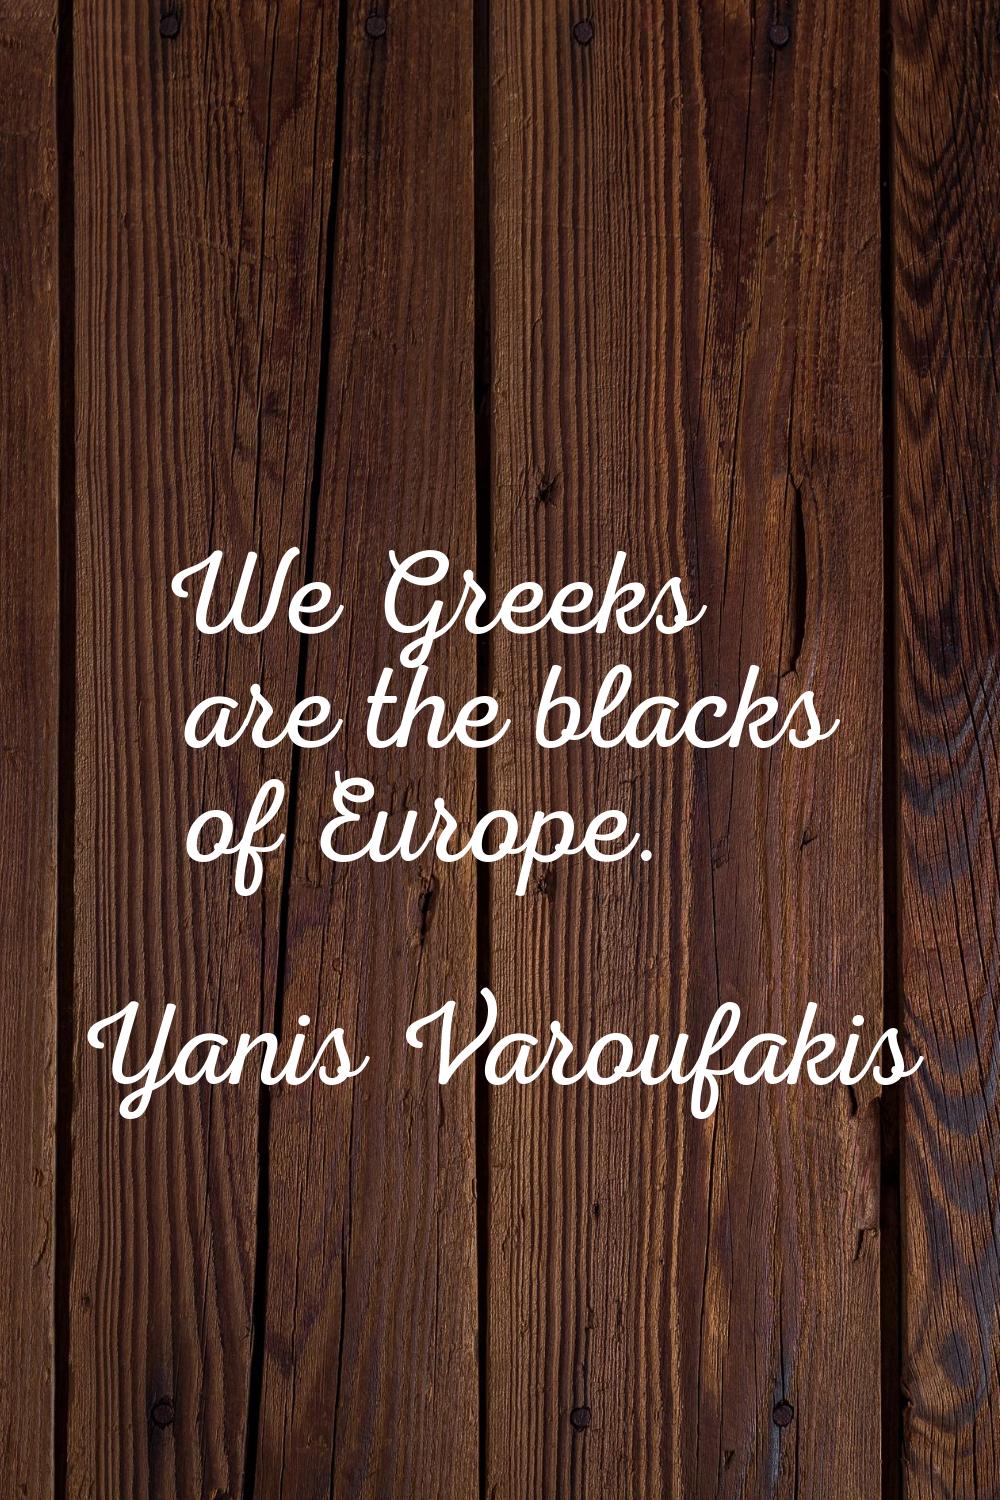 We Greeks are the blacks of Europe.